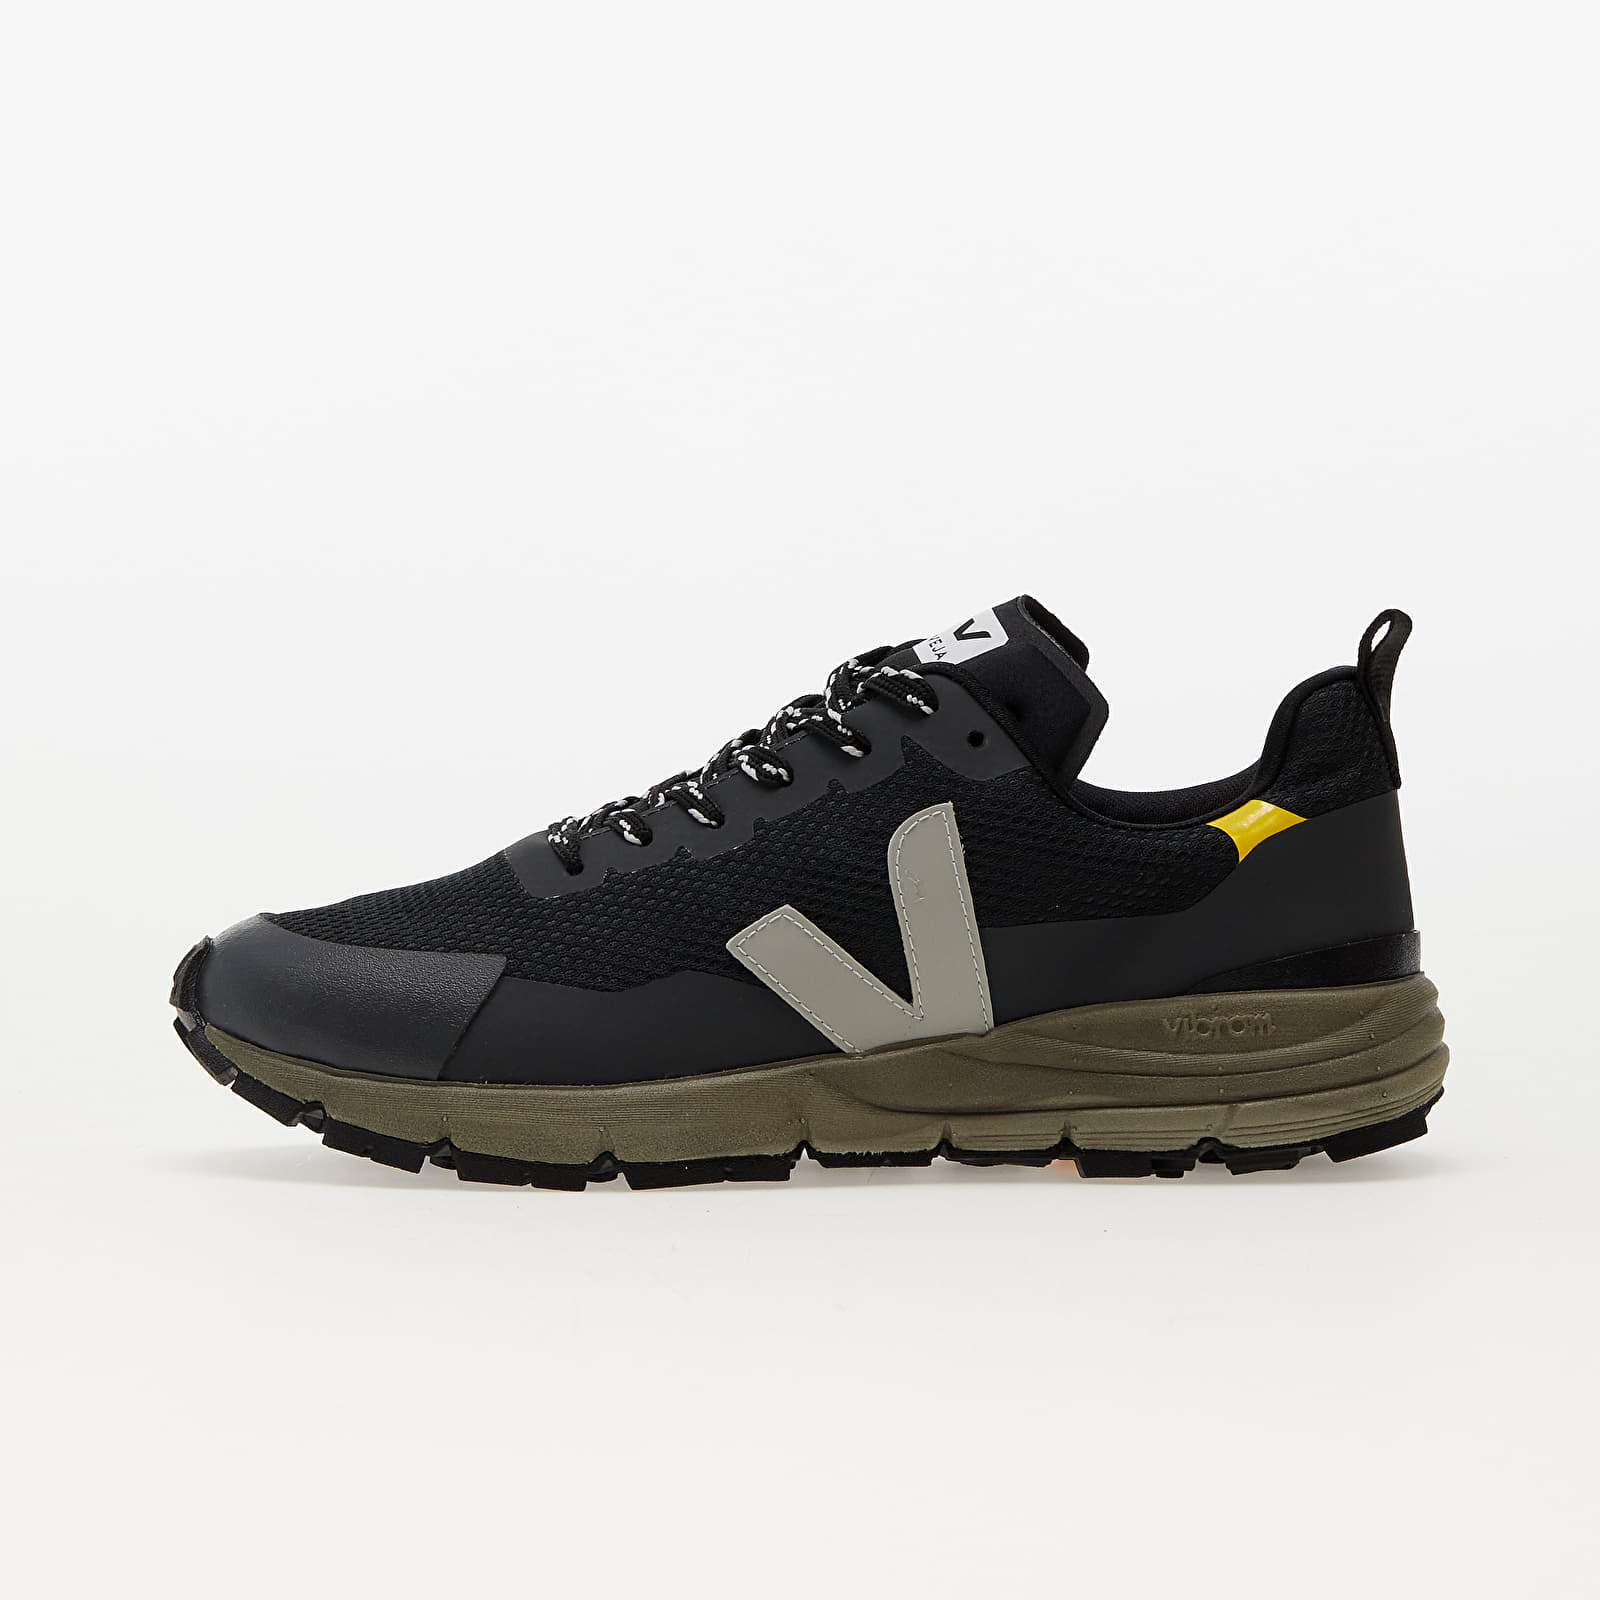 Men's sneakers and shoes Veja Dekkan Black Oxford-Grey Tonic